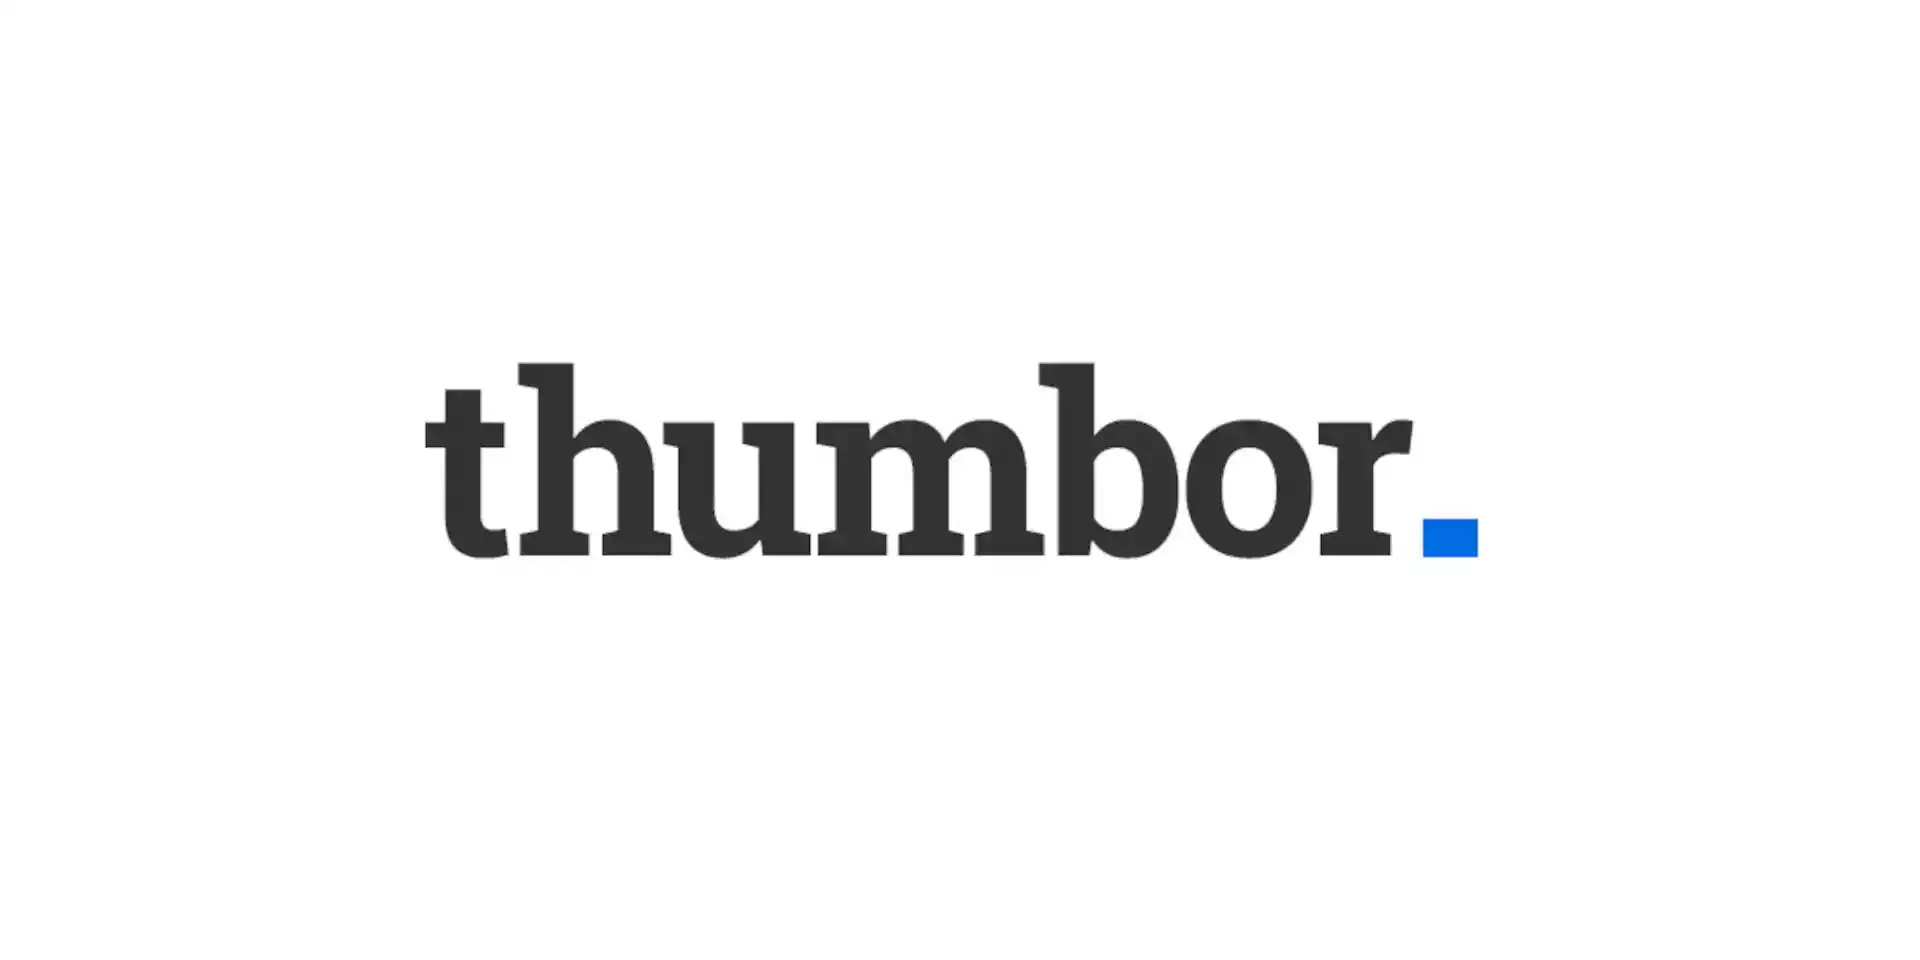 thumbor 用 docker 搭建开源图像裁剪服务